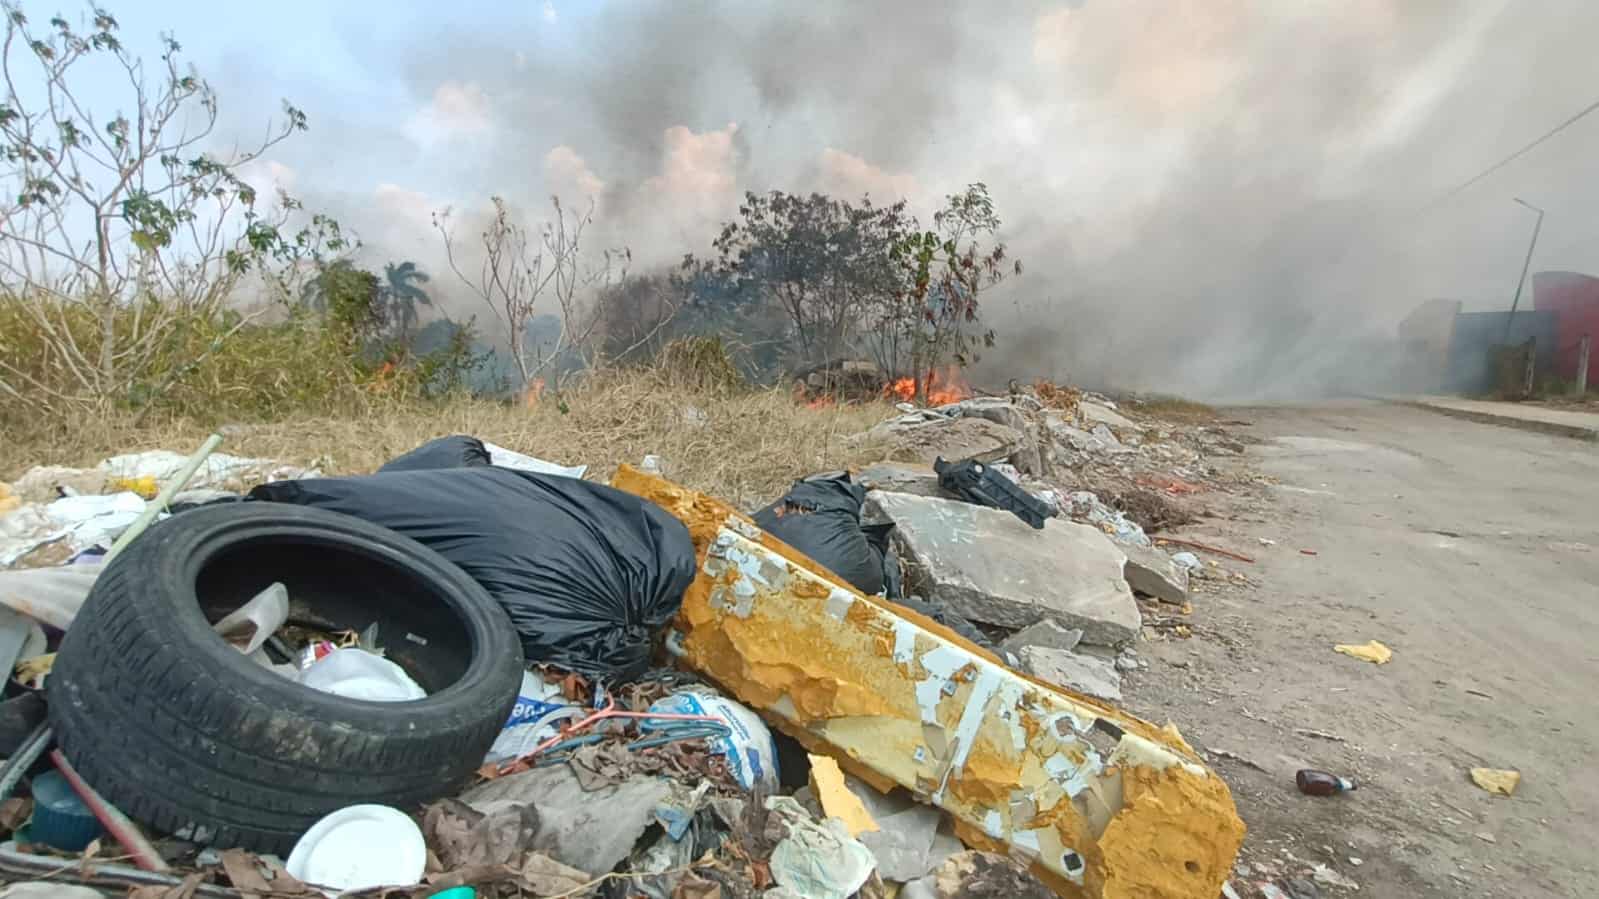 Se incendia basurero clandestino en Villahermosa 